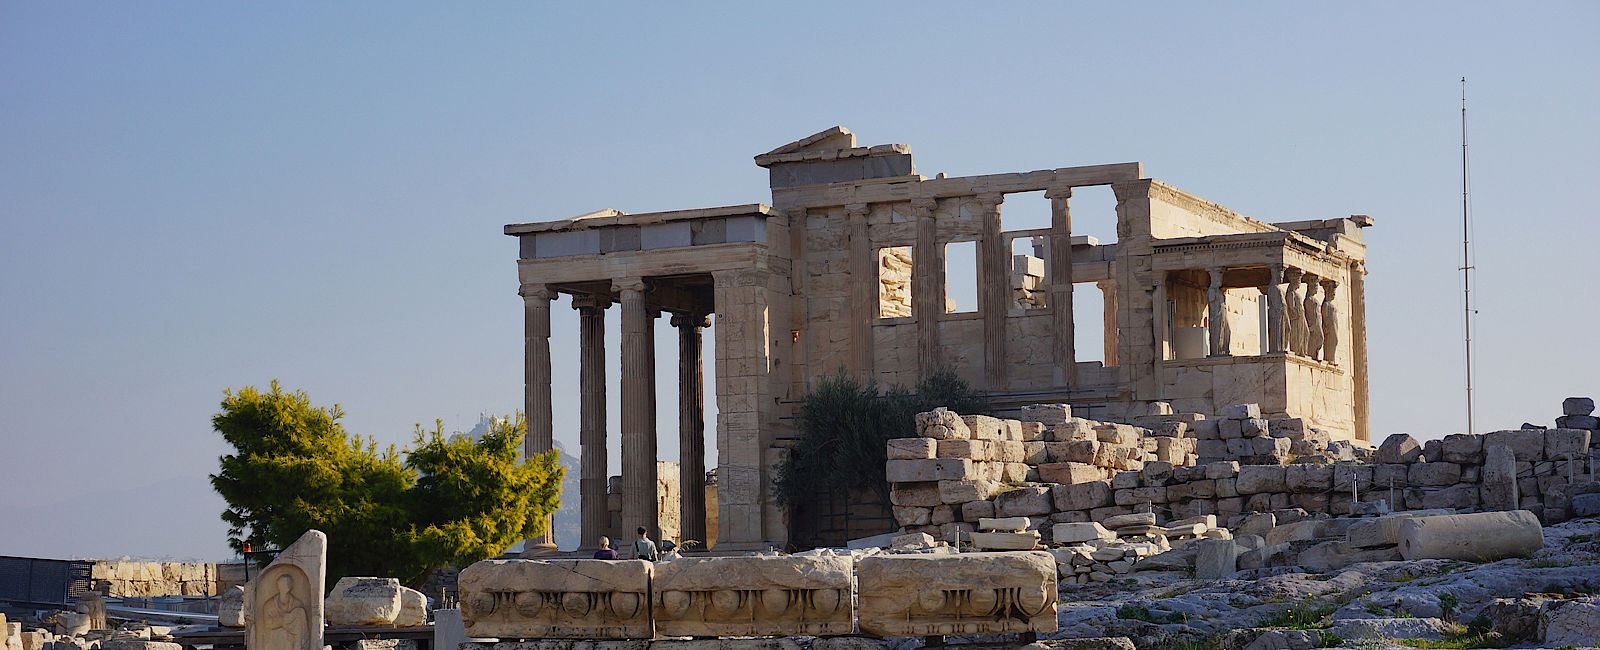 ATHEN
 Urlaub in Athen - Erste Kulturhauptstadt Europas 